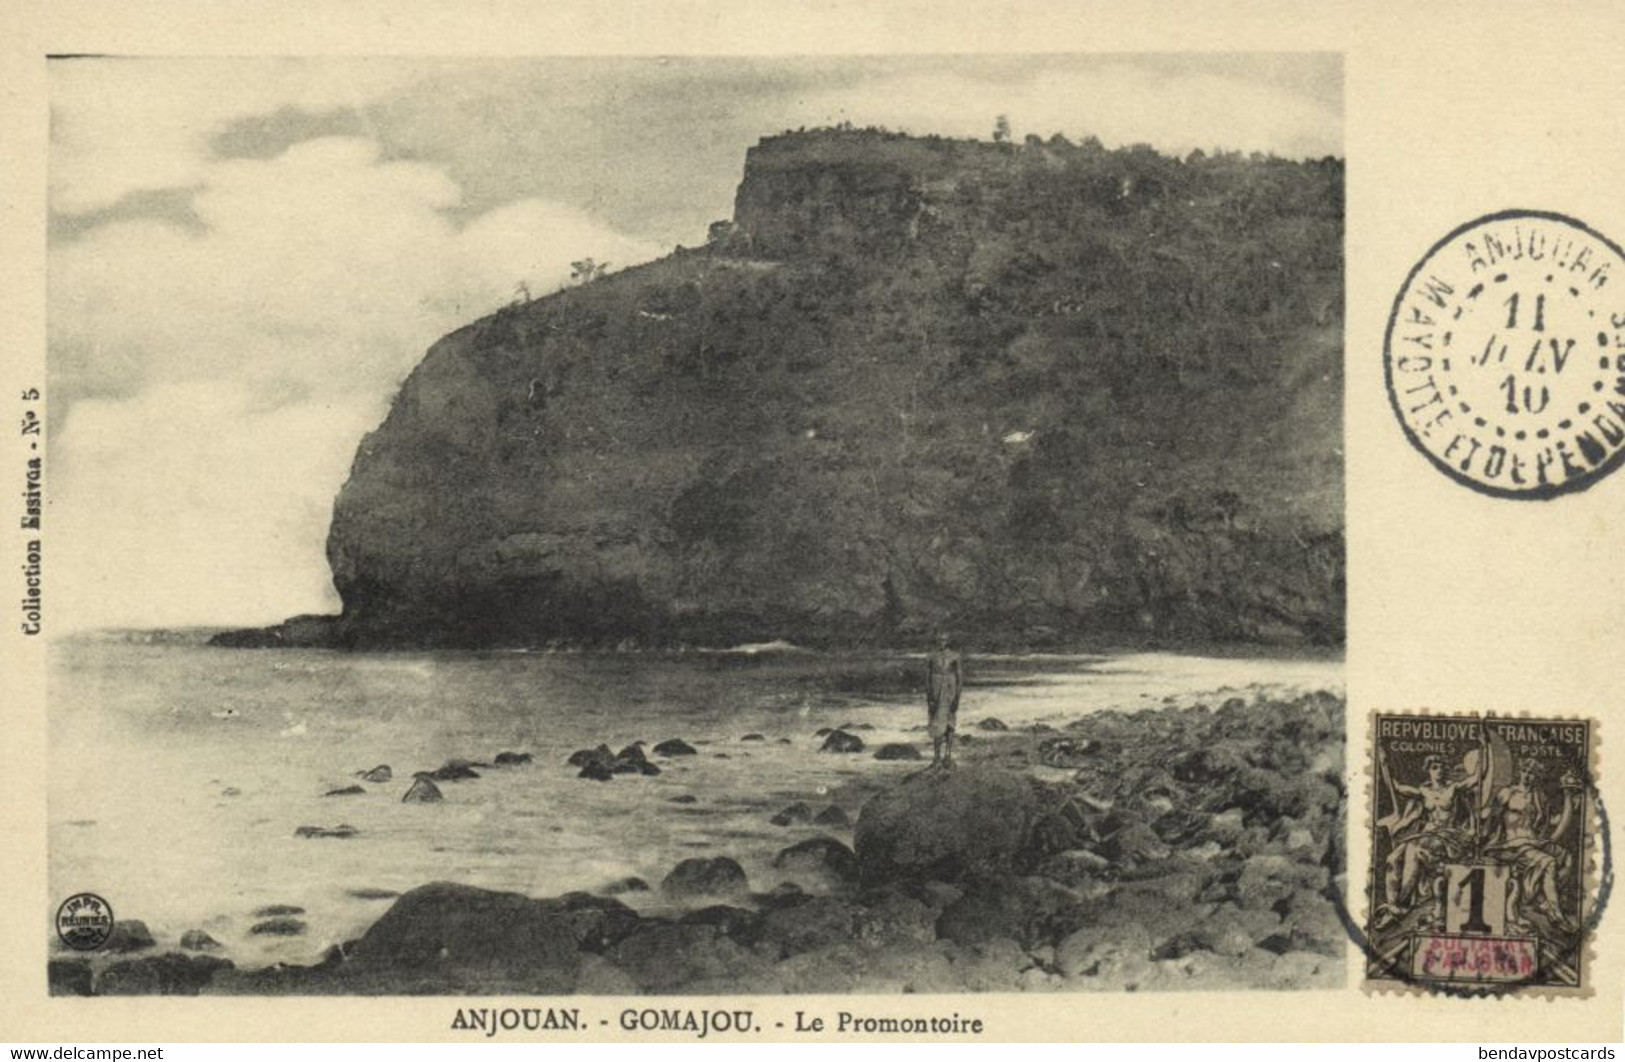 Comoros, ANJOUAN, Le Promontoire, Gomajou (1910) Postcard - Comoren